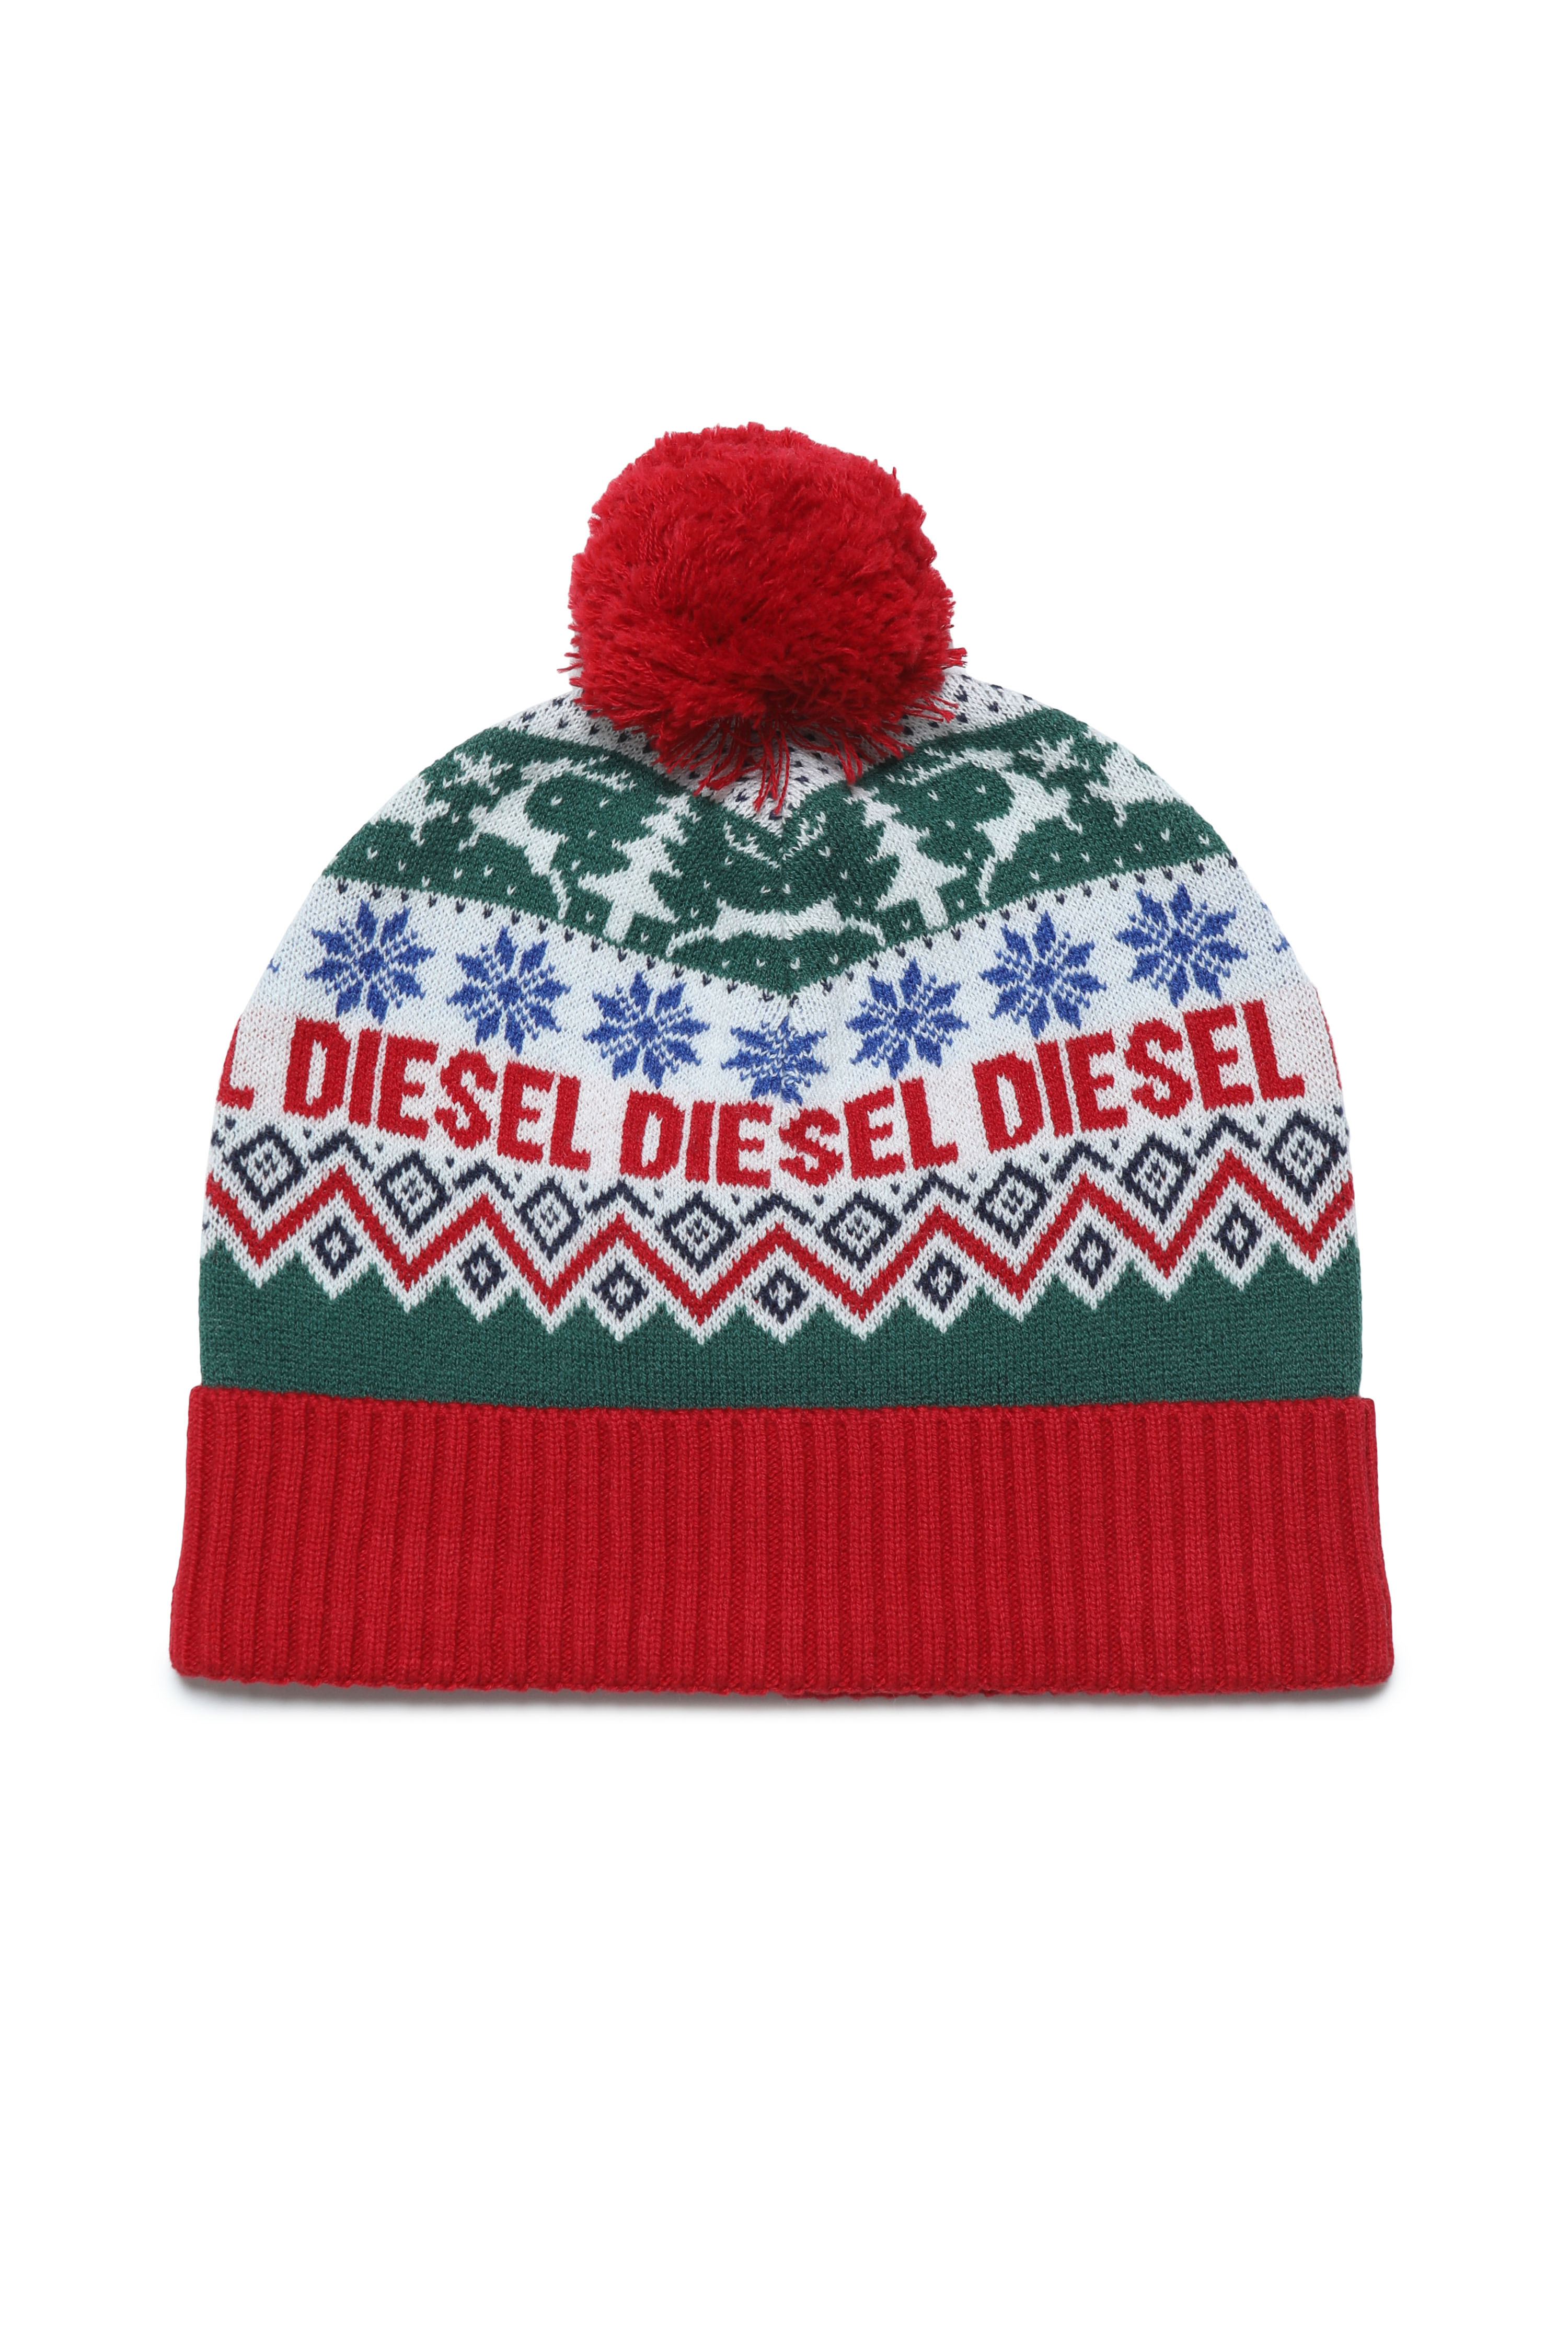 Diesel - FERRY CHR, Multicolor - Image 1